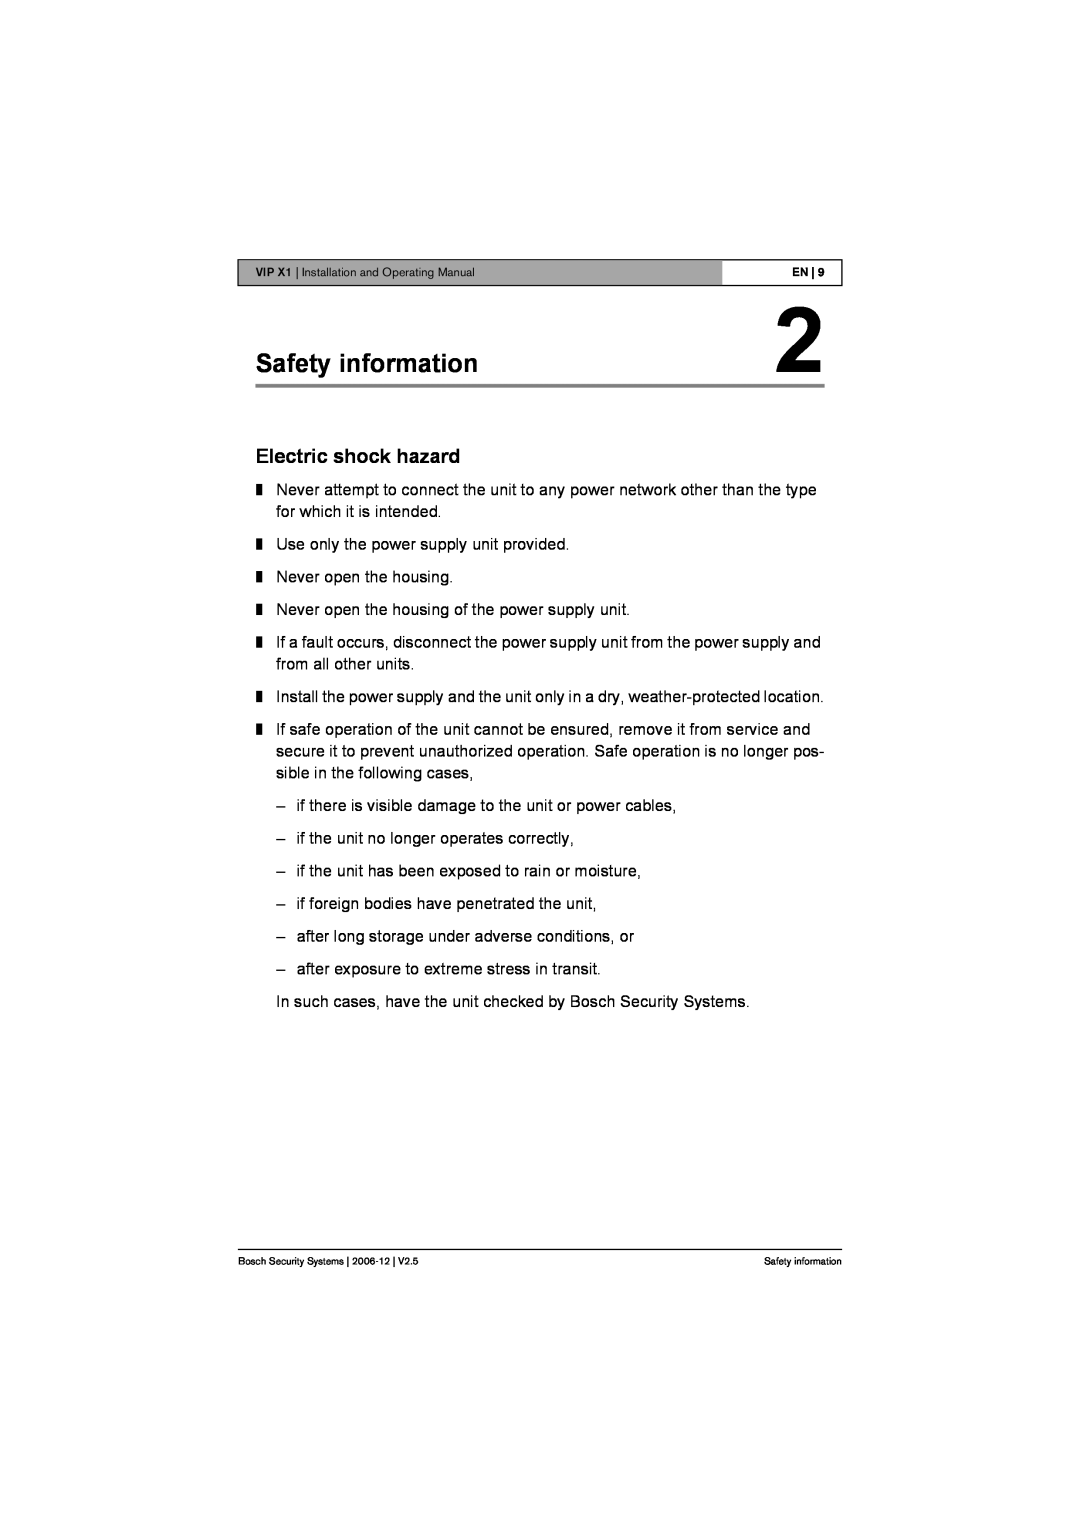 Bosch Appliances VIP X1 manual Safety information, Electric shock hazard 